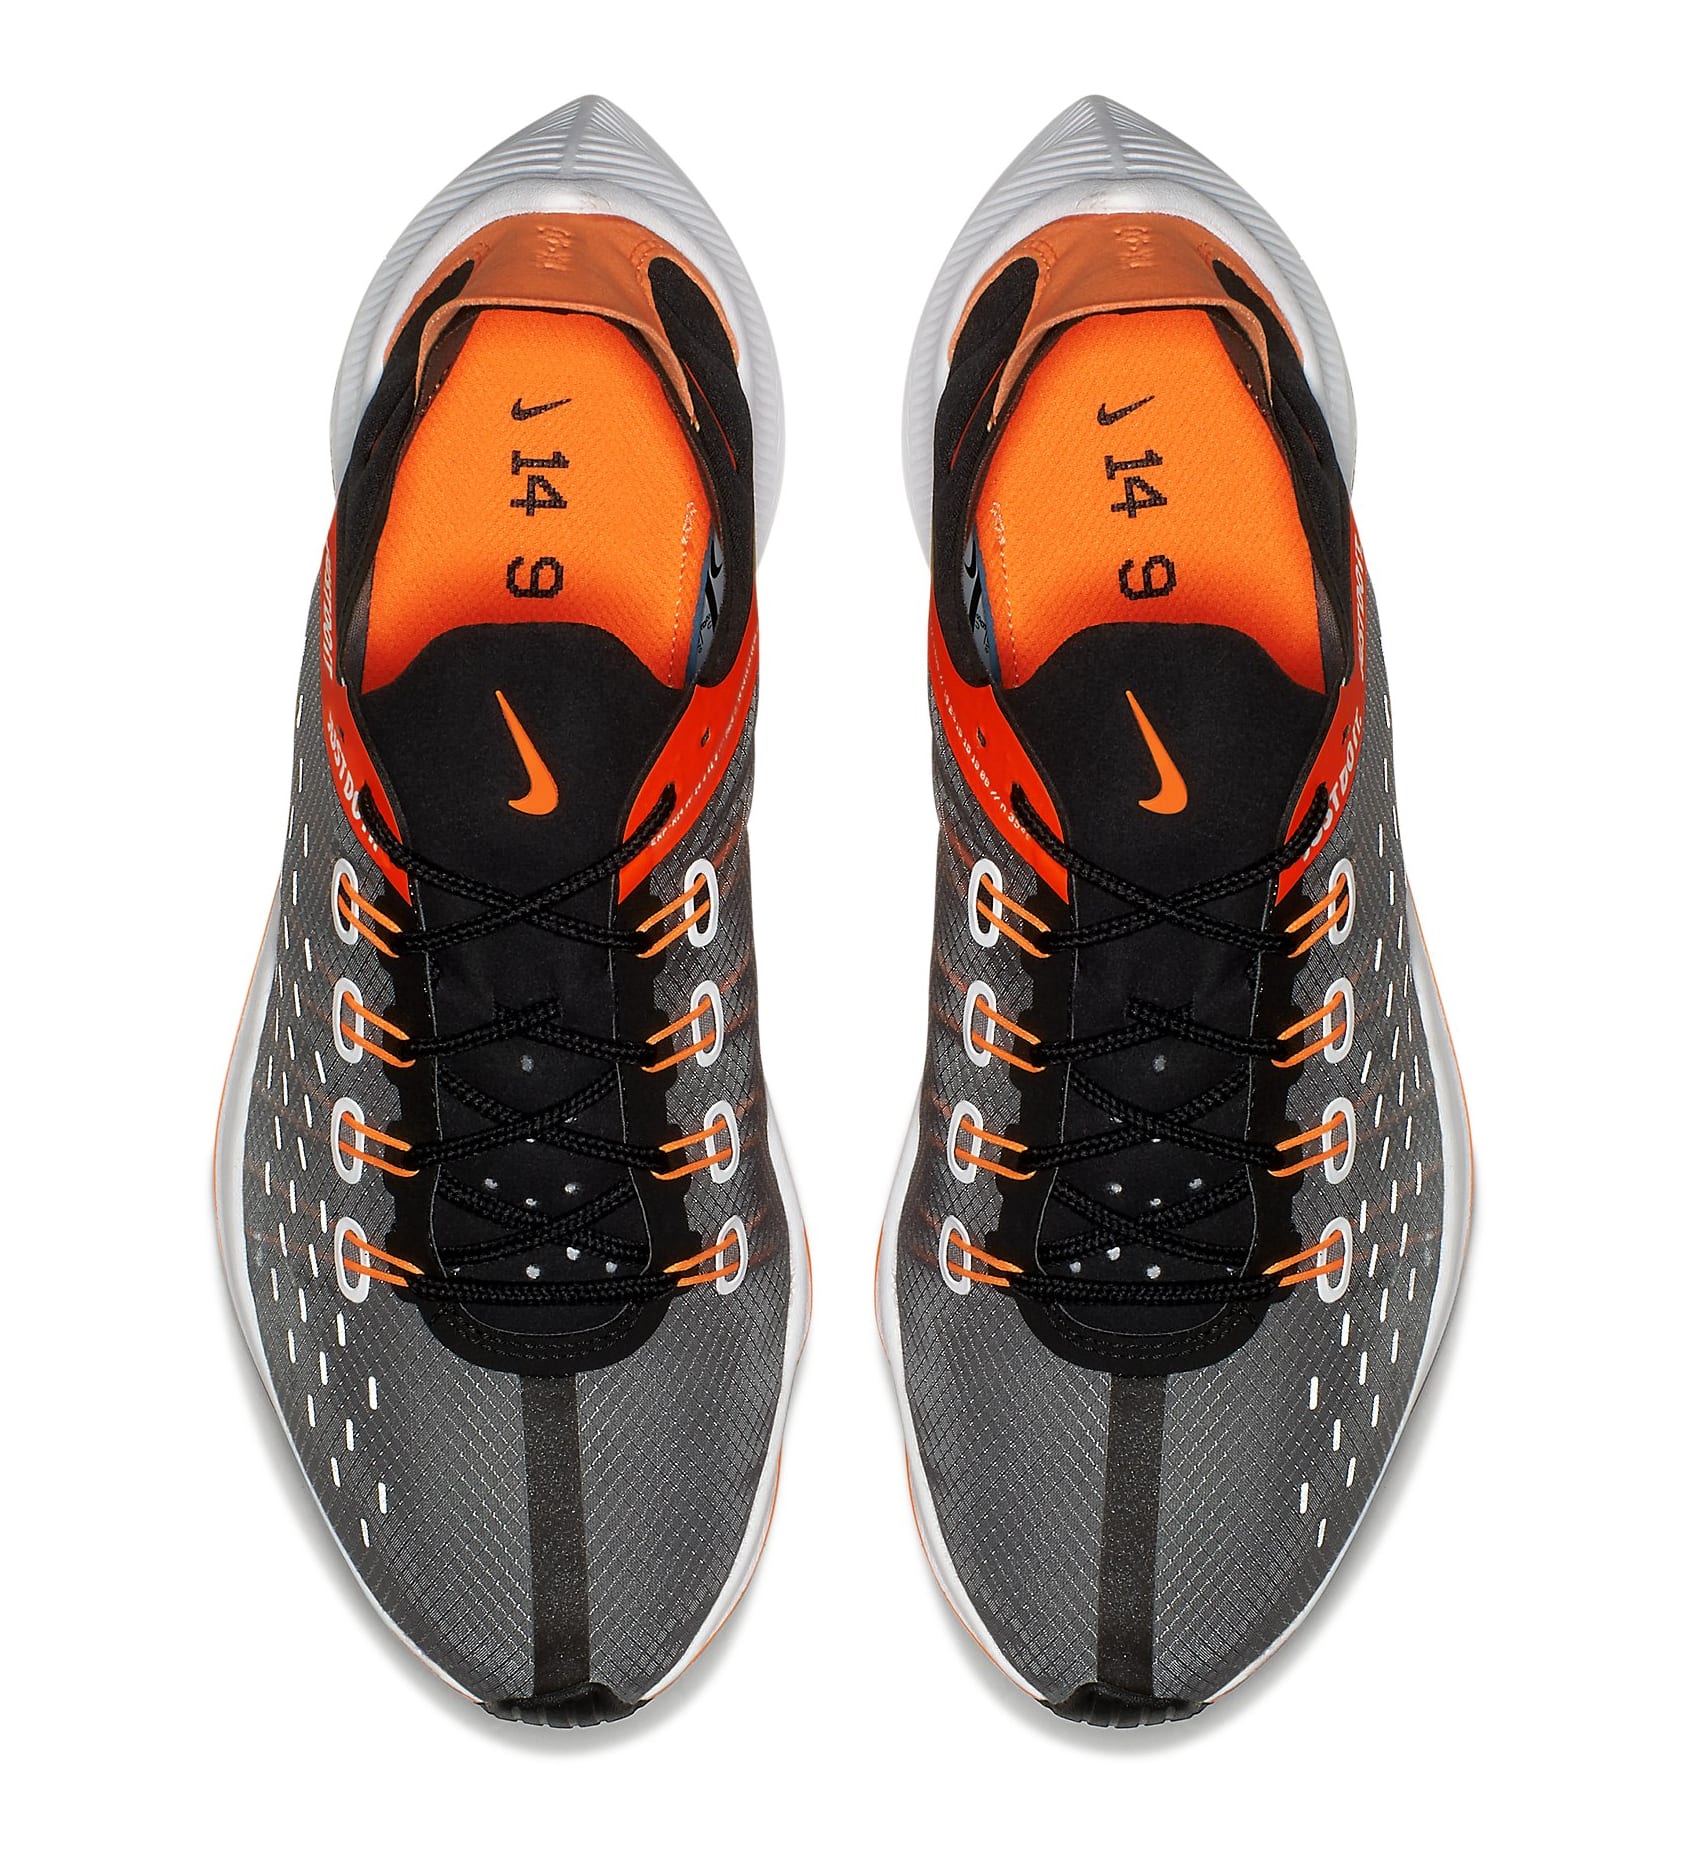 Nike exp-x14 grey white кроссовки легкие дышащие на лето